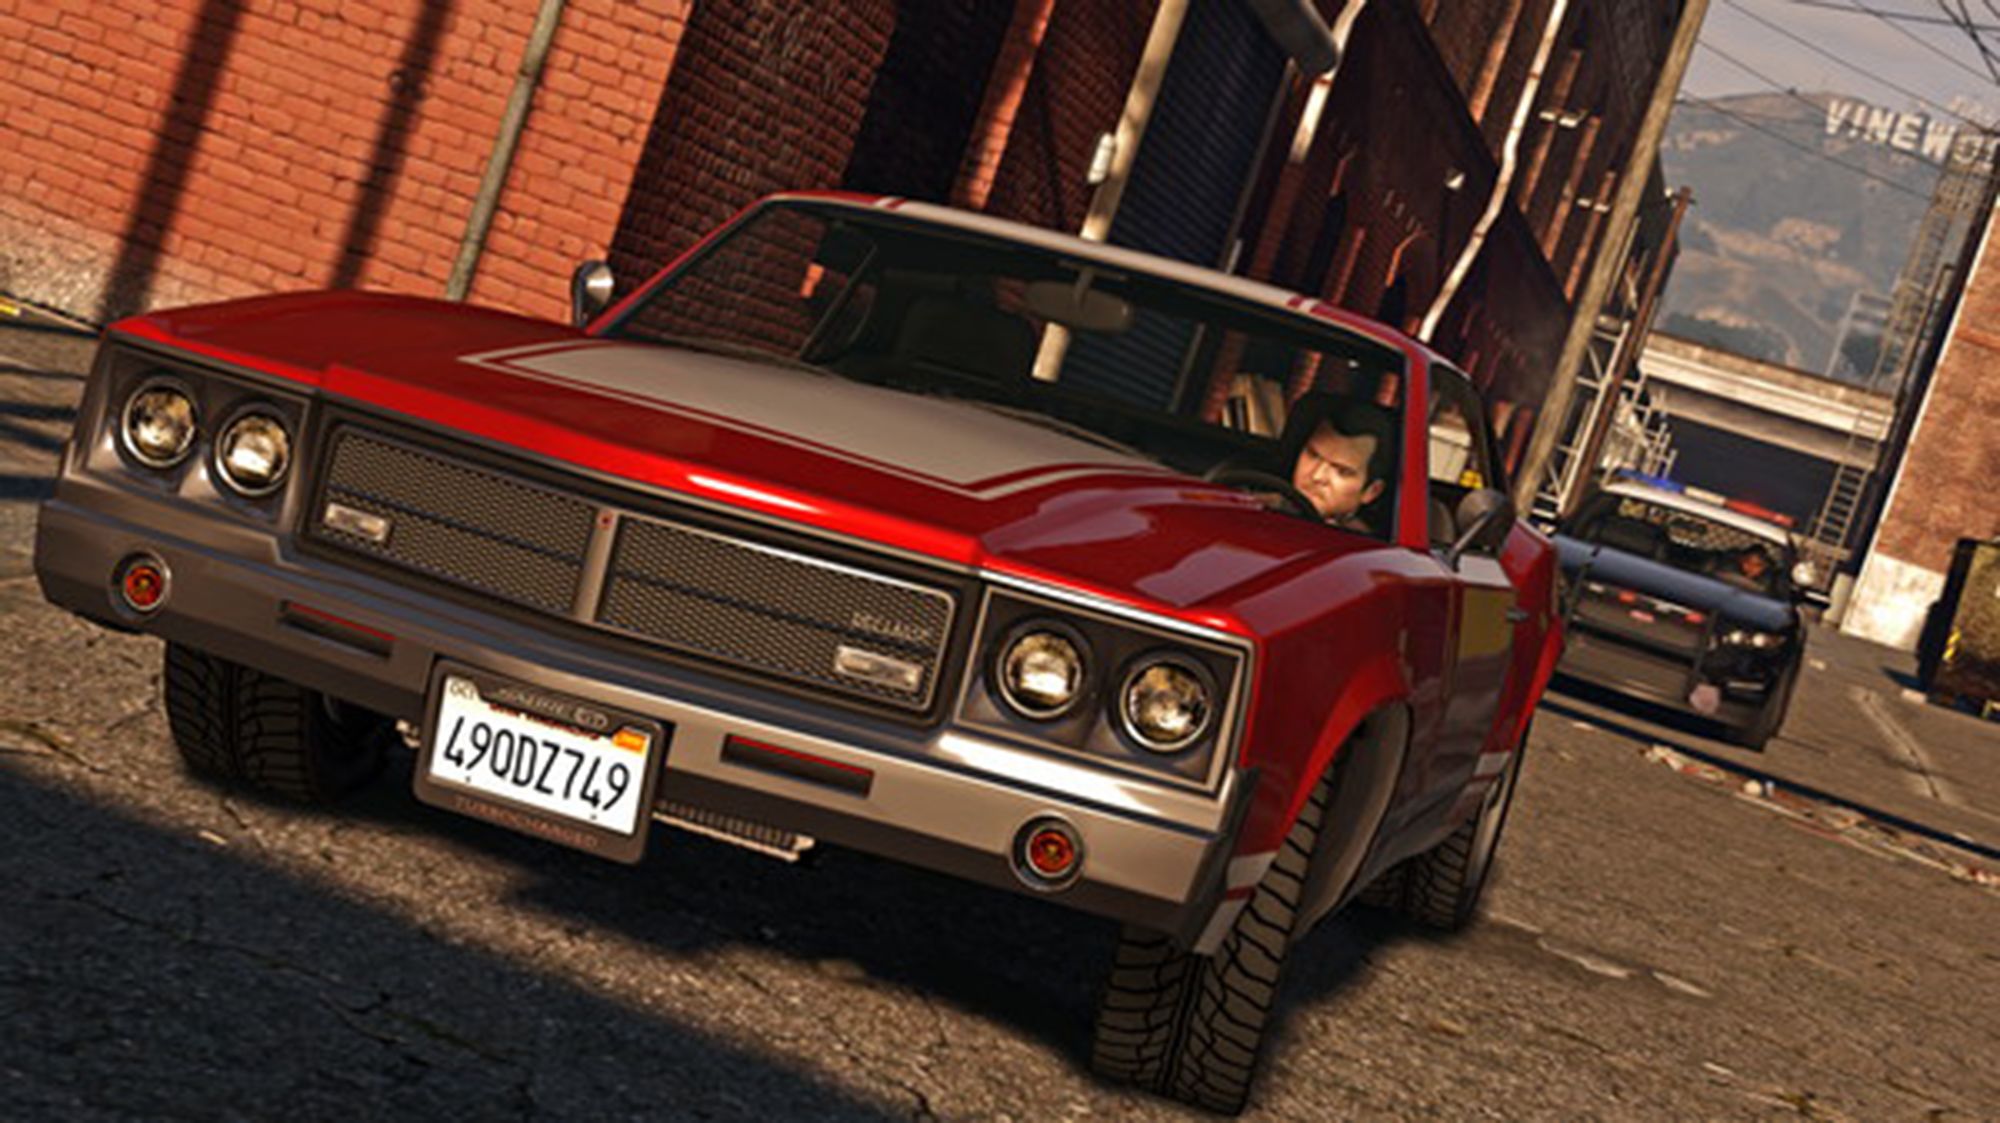 Rockstar Confirms GTA 6, Tips Biggest Grand Theft Auto Yet - SlashGear